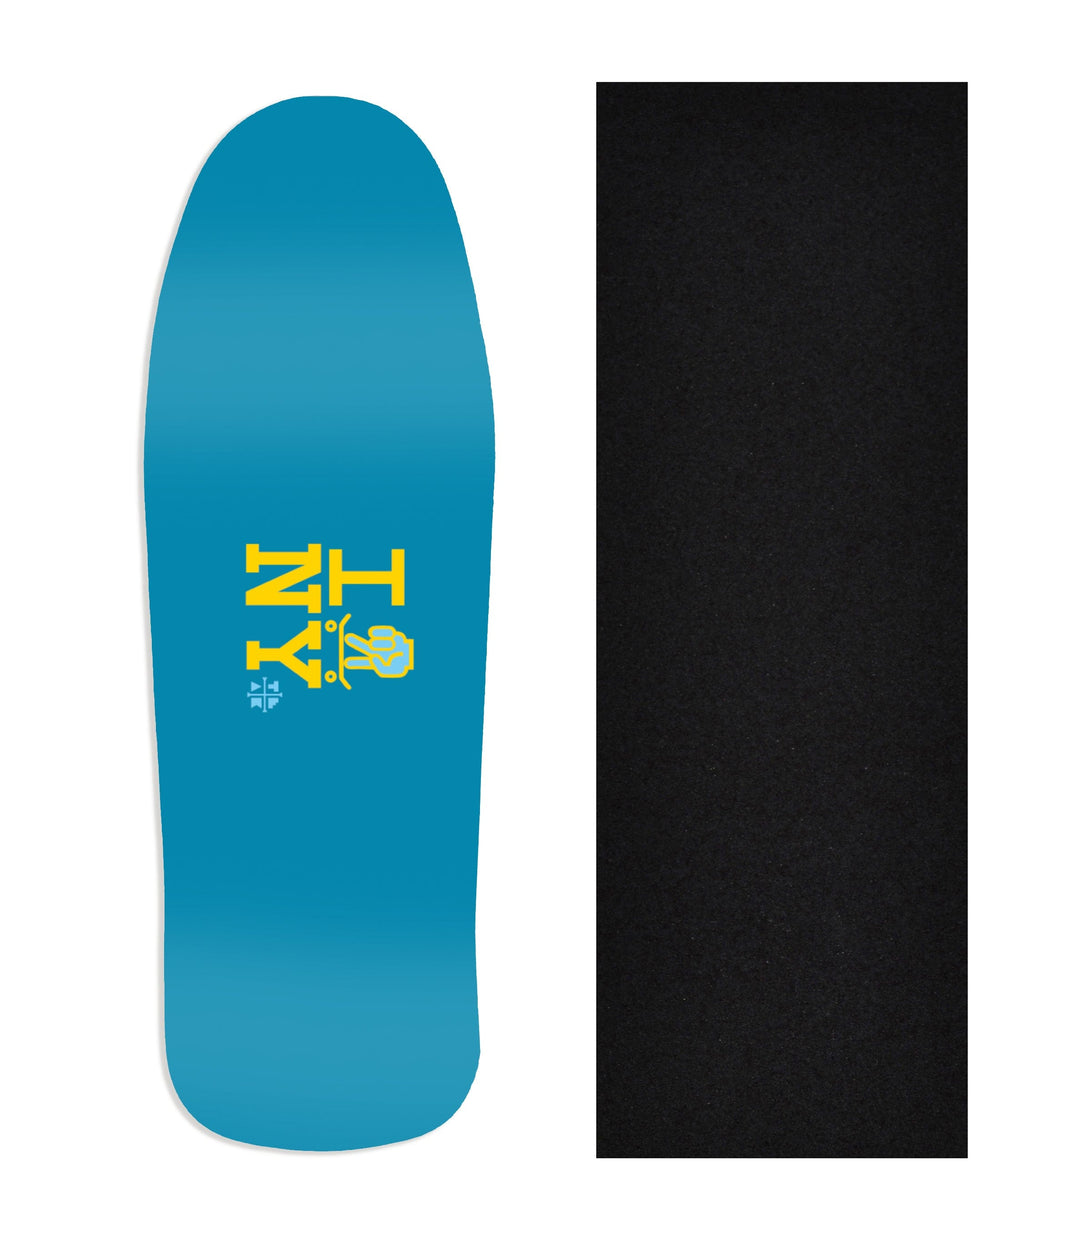 Teak Tuning Heat Transfer Graphic Wooden Fingerboard Deck, "I Skate NY" (Blue) Carlsbad Cruiser Deck